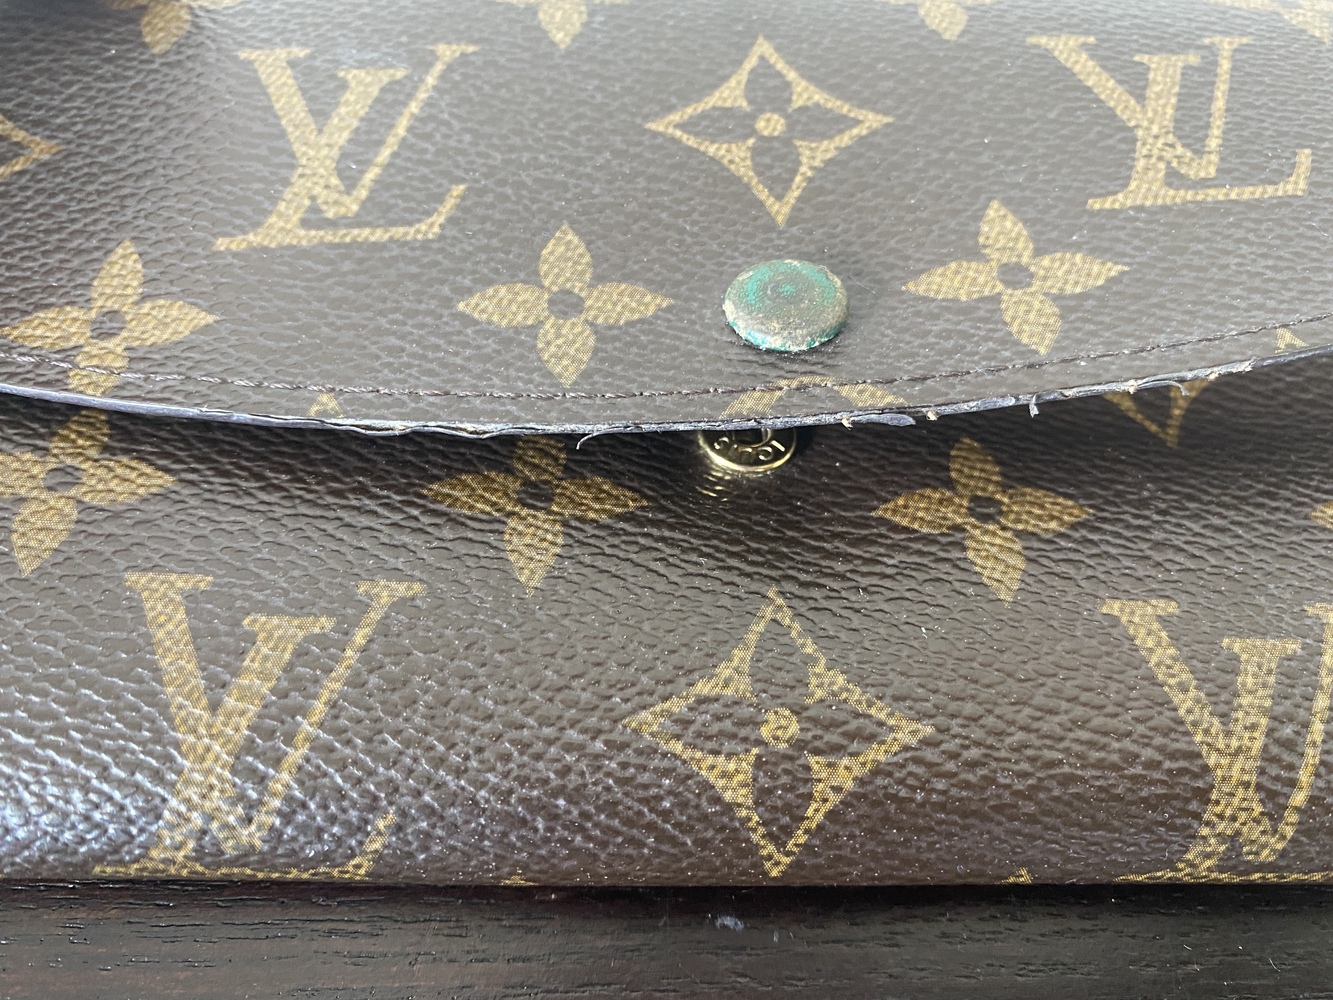 Louis Vuitton Emilie monogram, green wallet (CA5102)